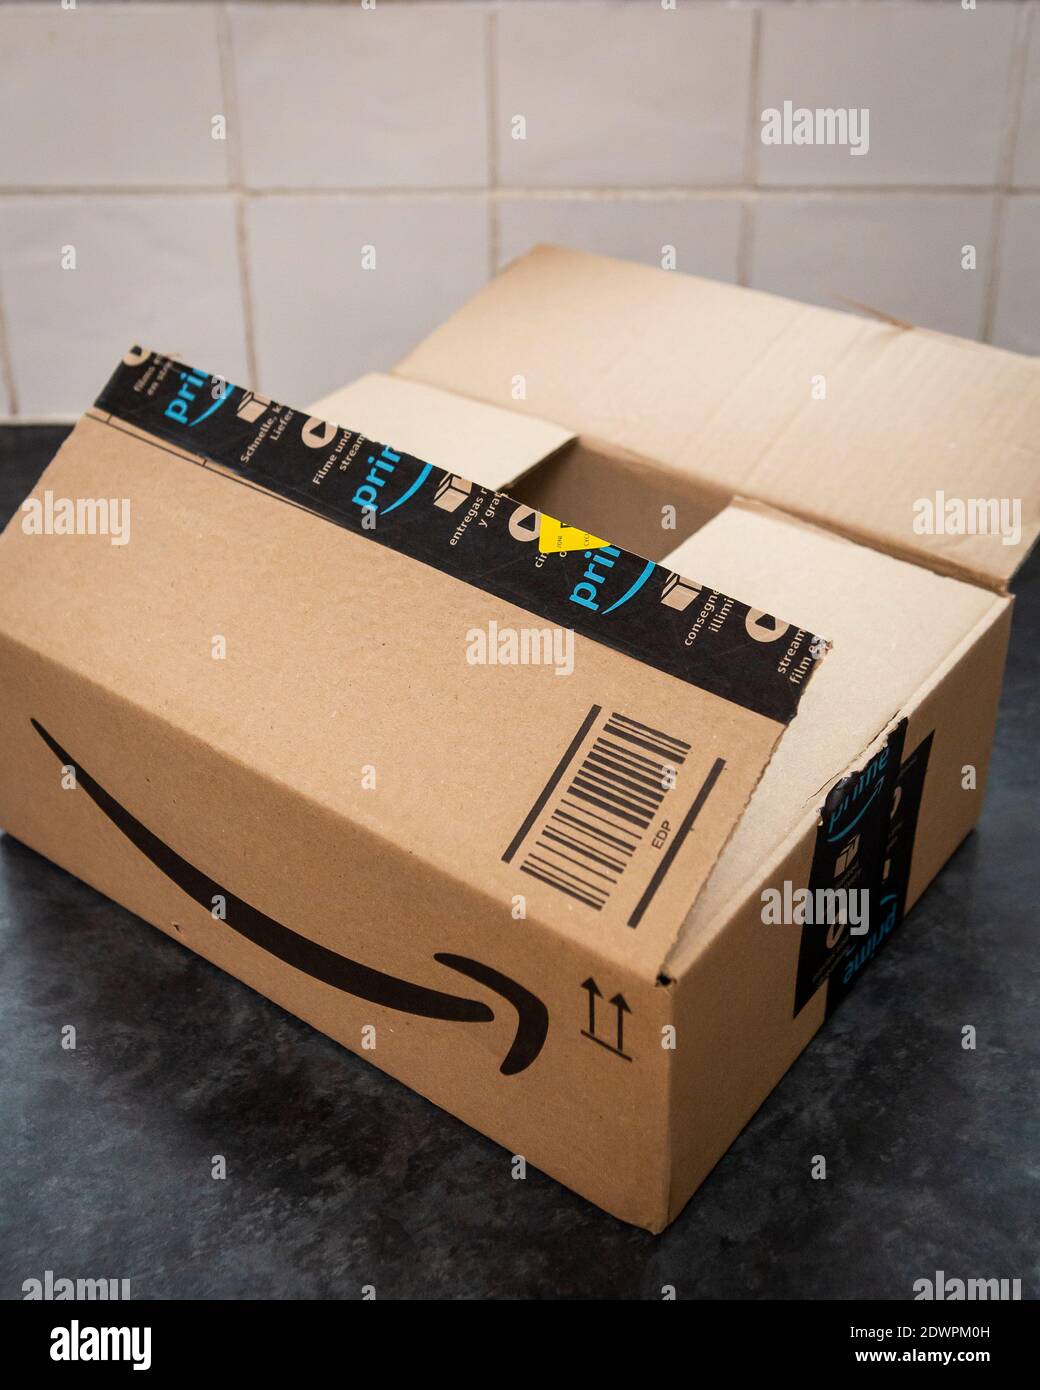 Covid 19 Coronavirus Test per Post geliefert von Amazon in Box, UK für Sekundarschüler Stockfoto